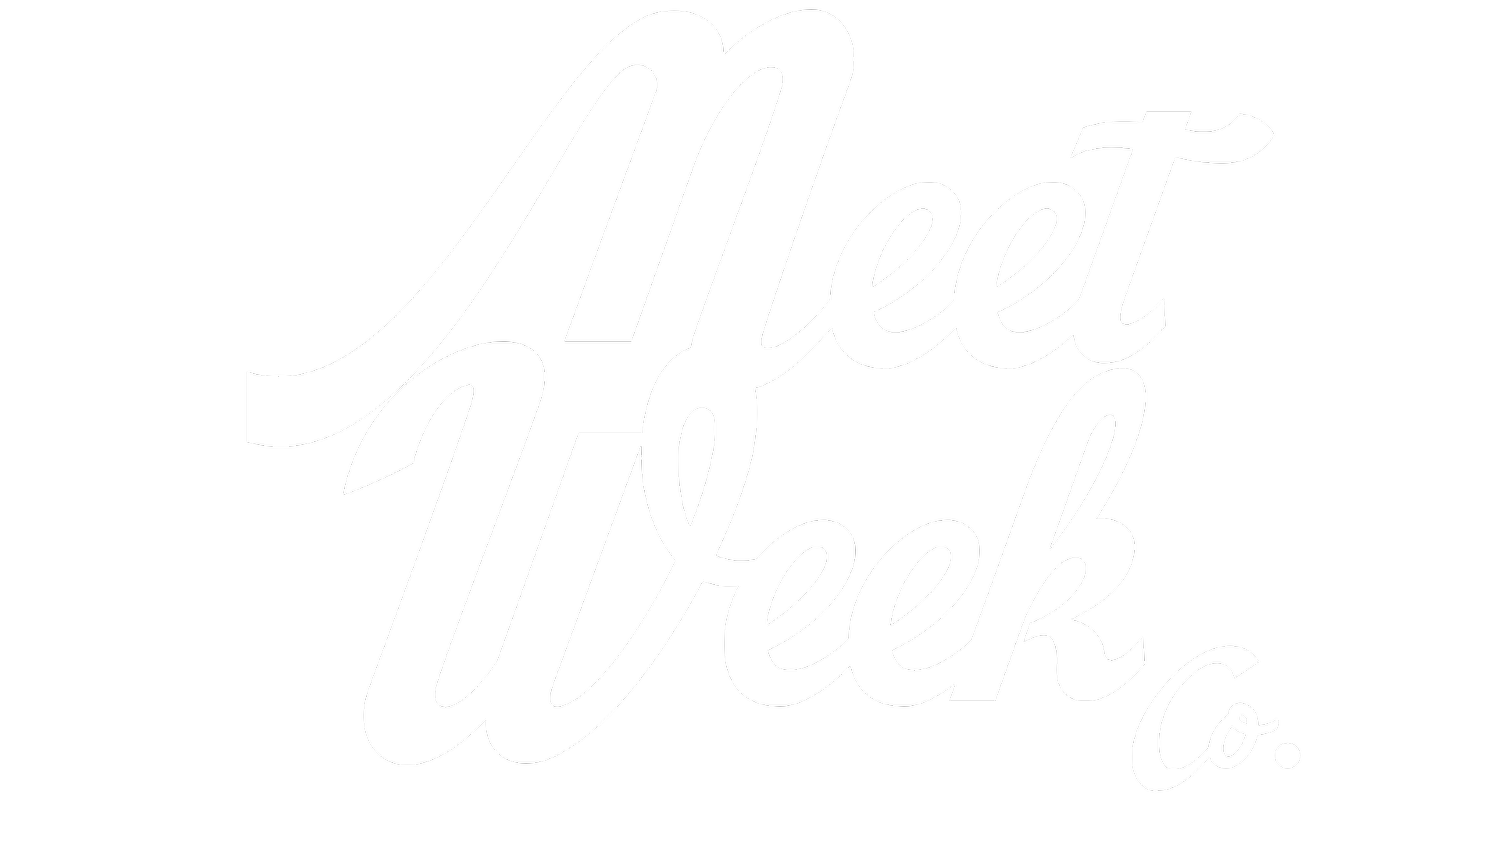 Meet Week Co.